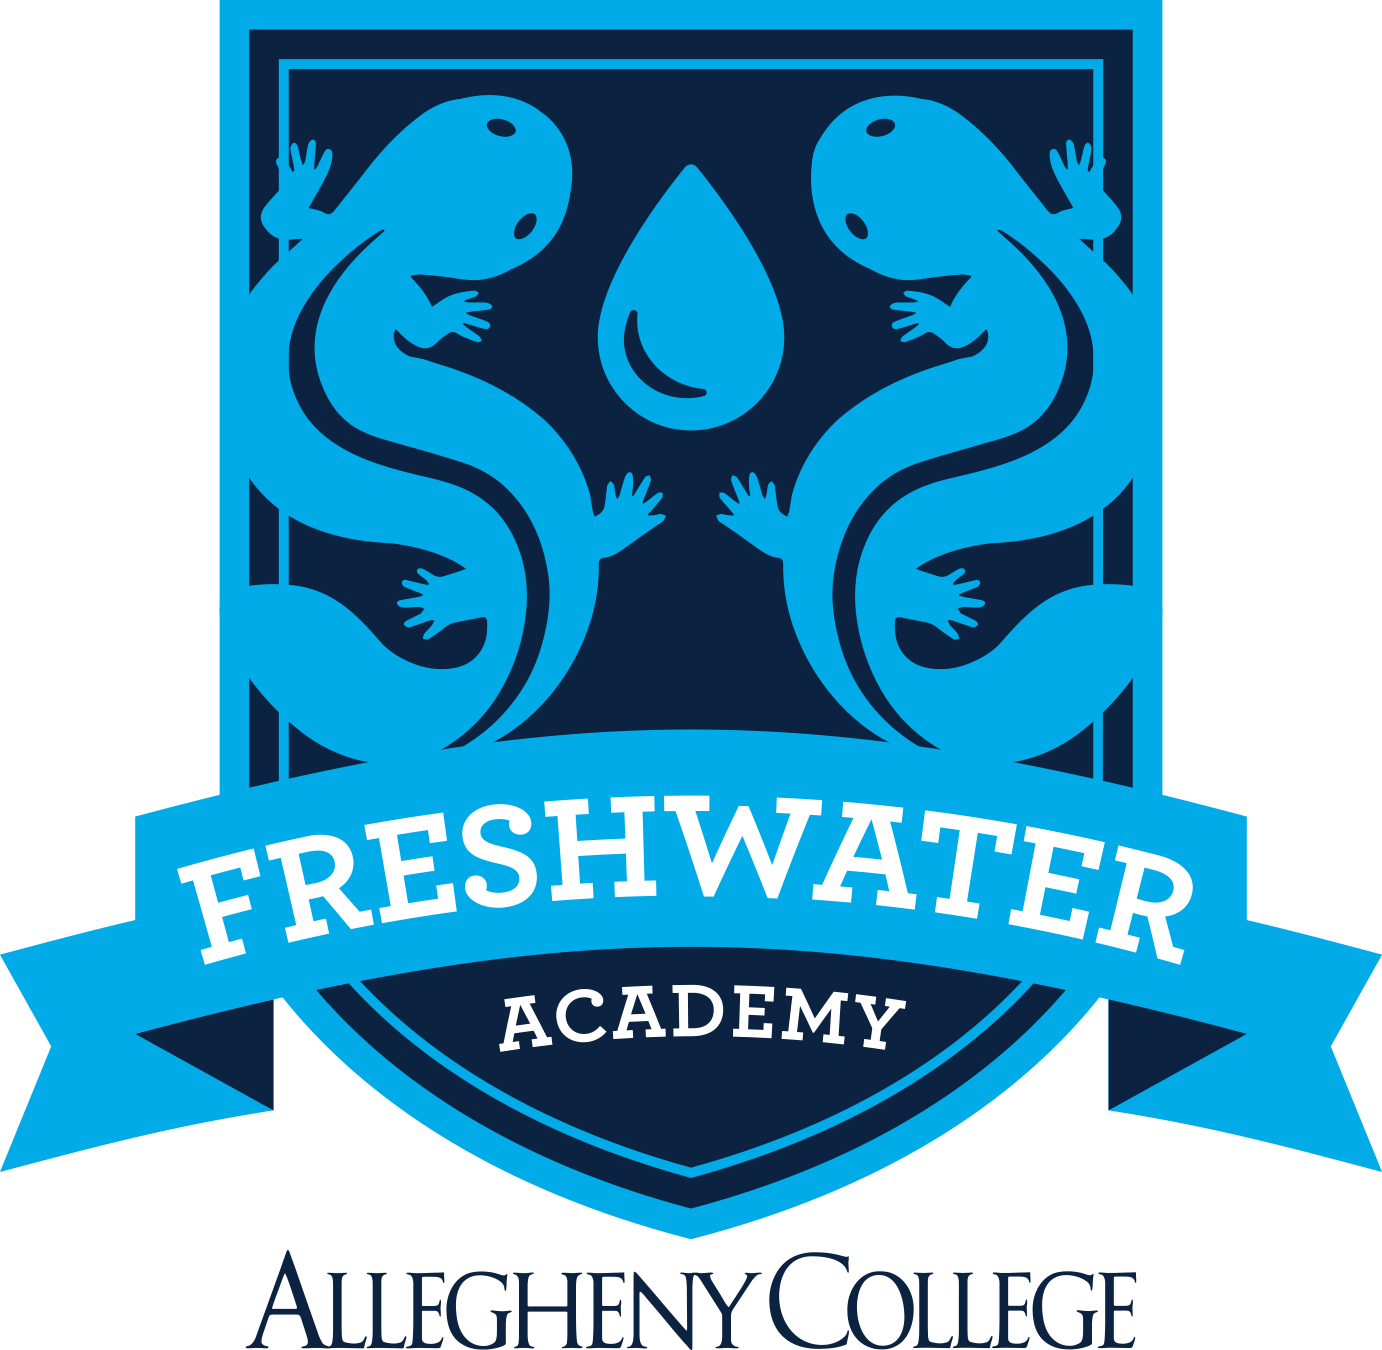 Freshwaster Academy